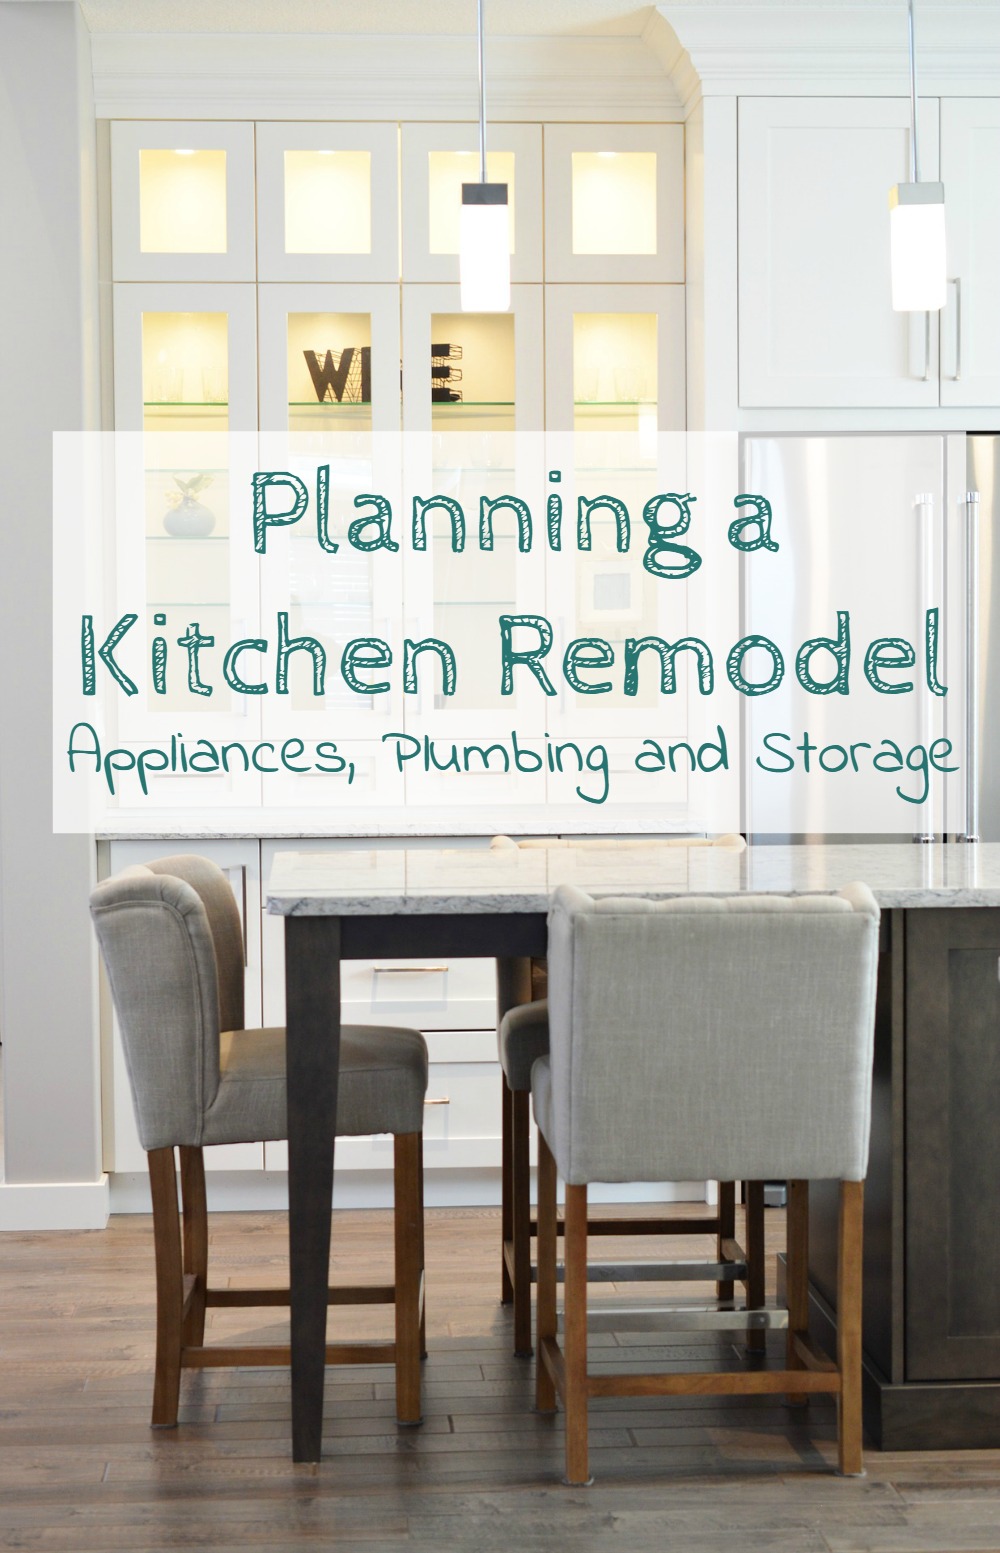 How to plan a kitchen remodel - appliances, plumbing, storage